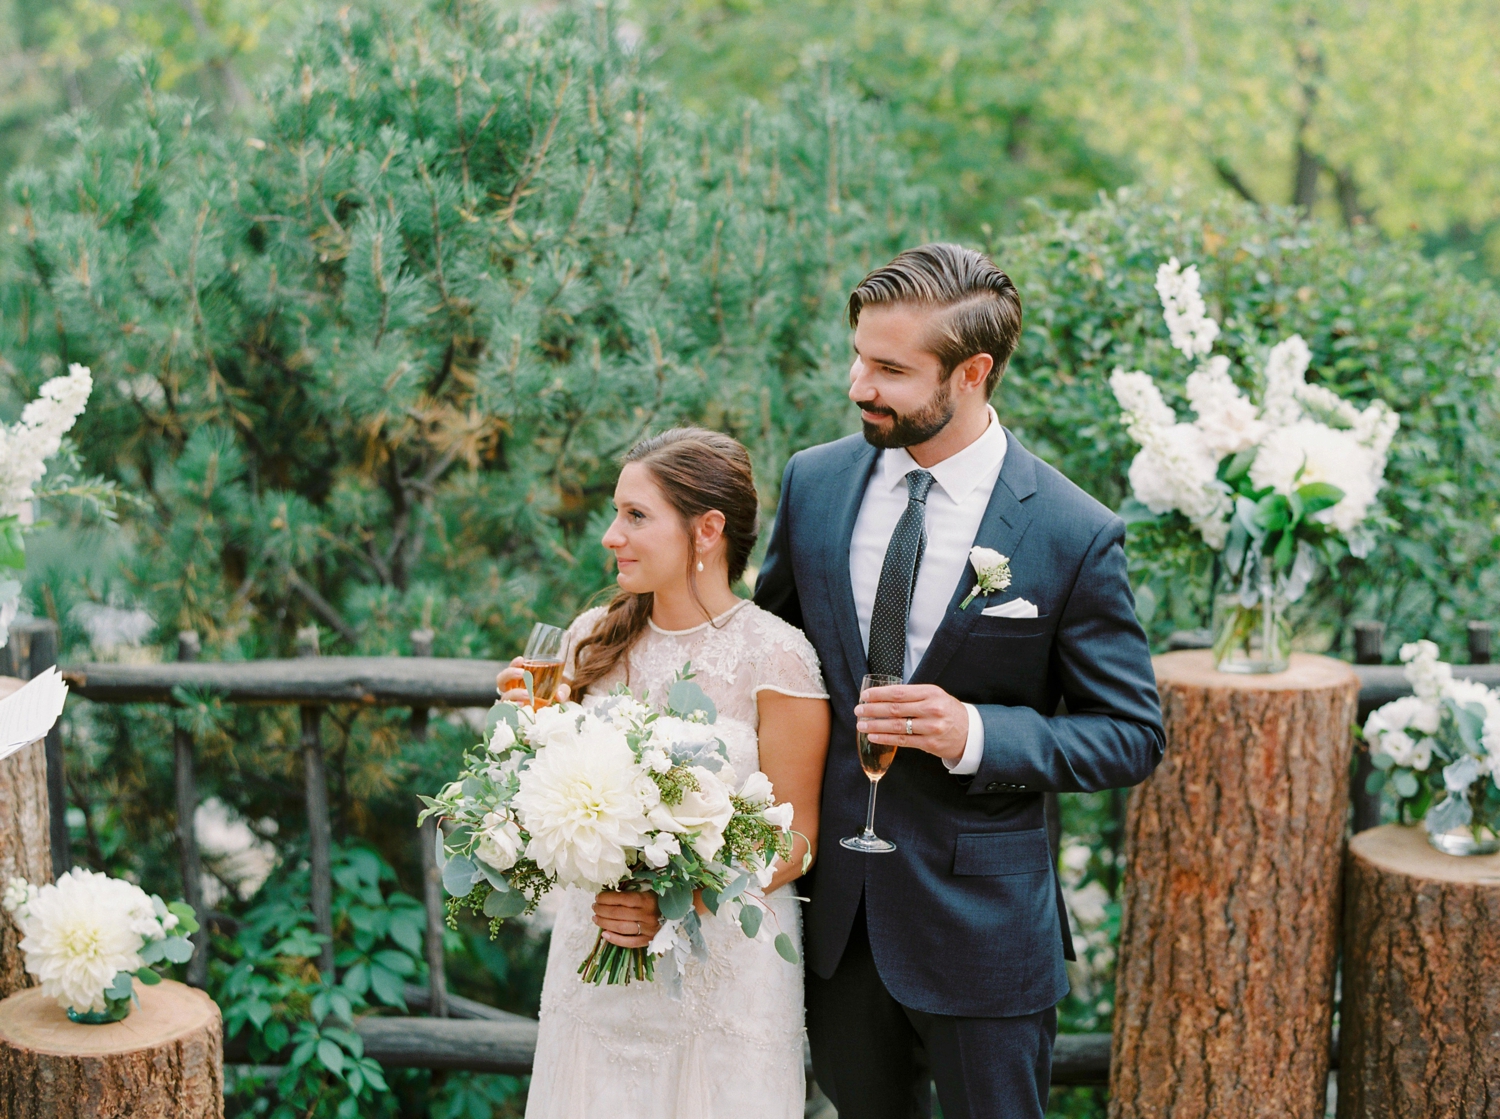 Calgary wedding photographers | fine art film | Justine Milton Photography | wedding inspiration | wedding chairs | wedding flowers | wedding ceremony | bride and groom | wedding ceremony